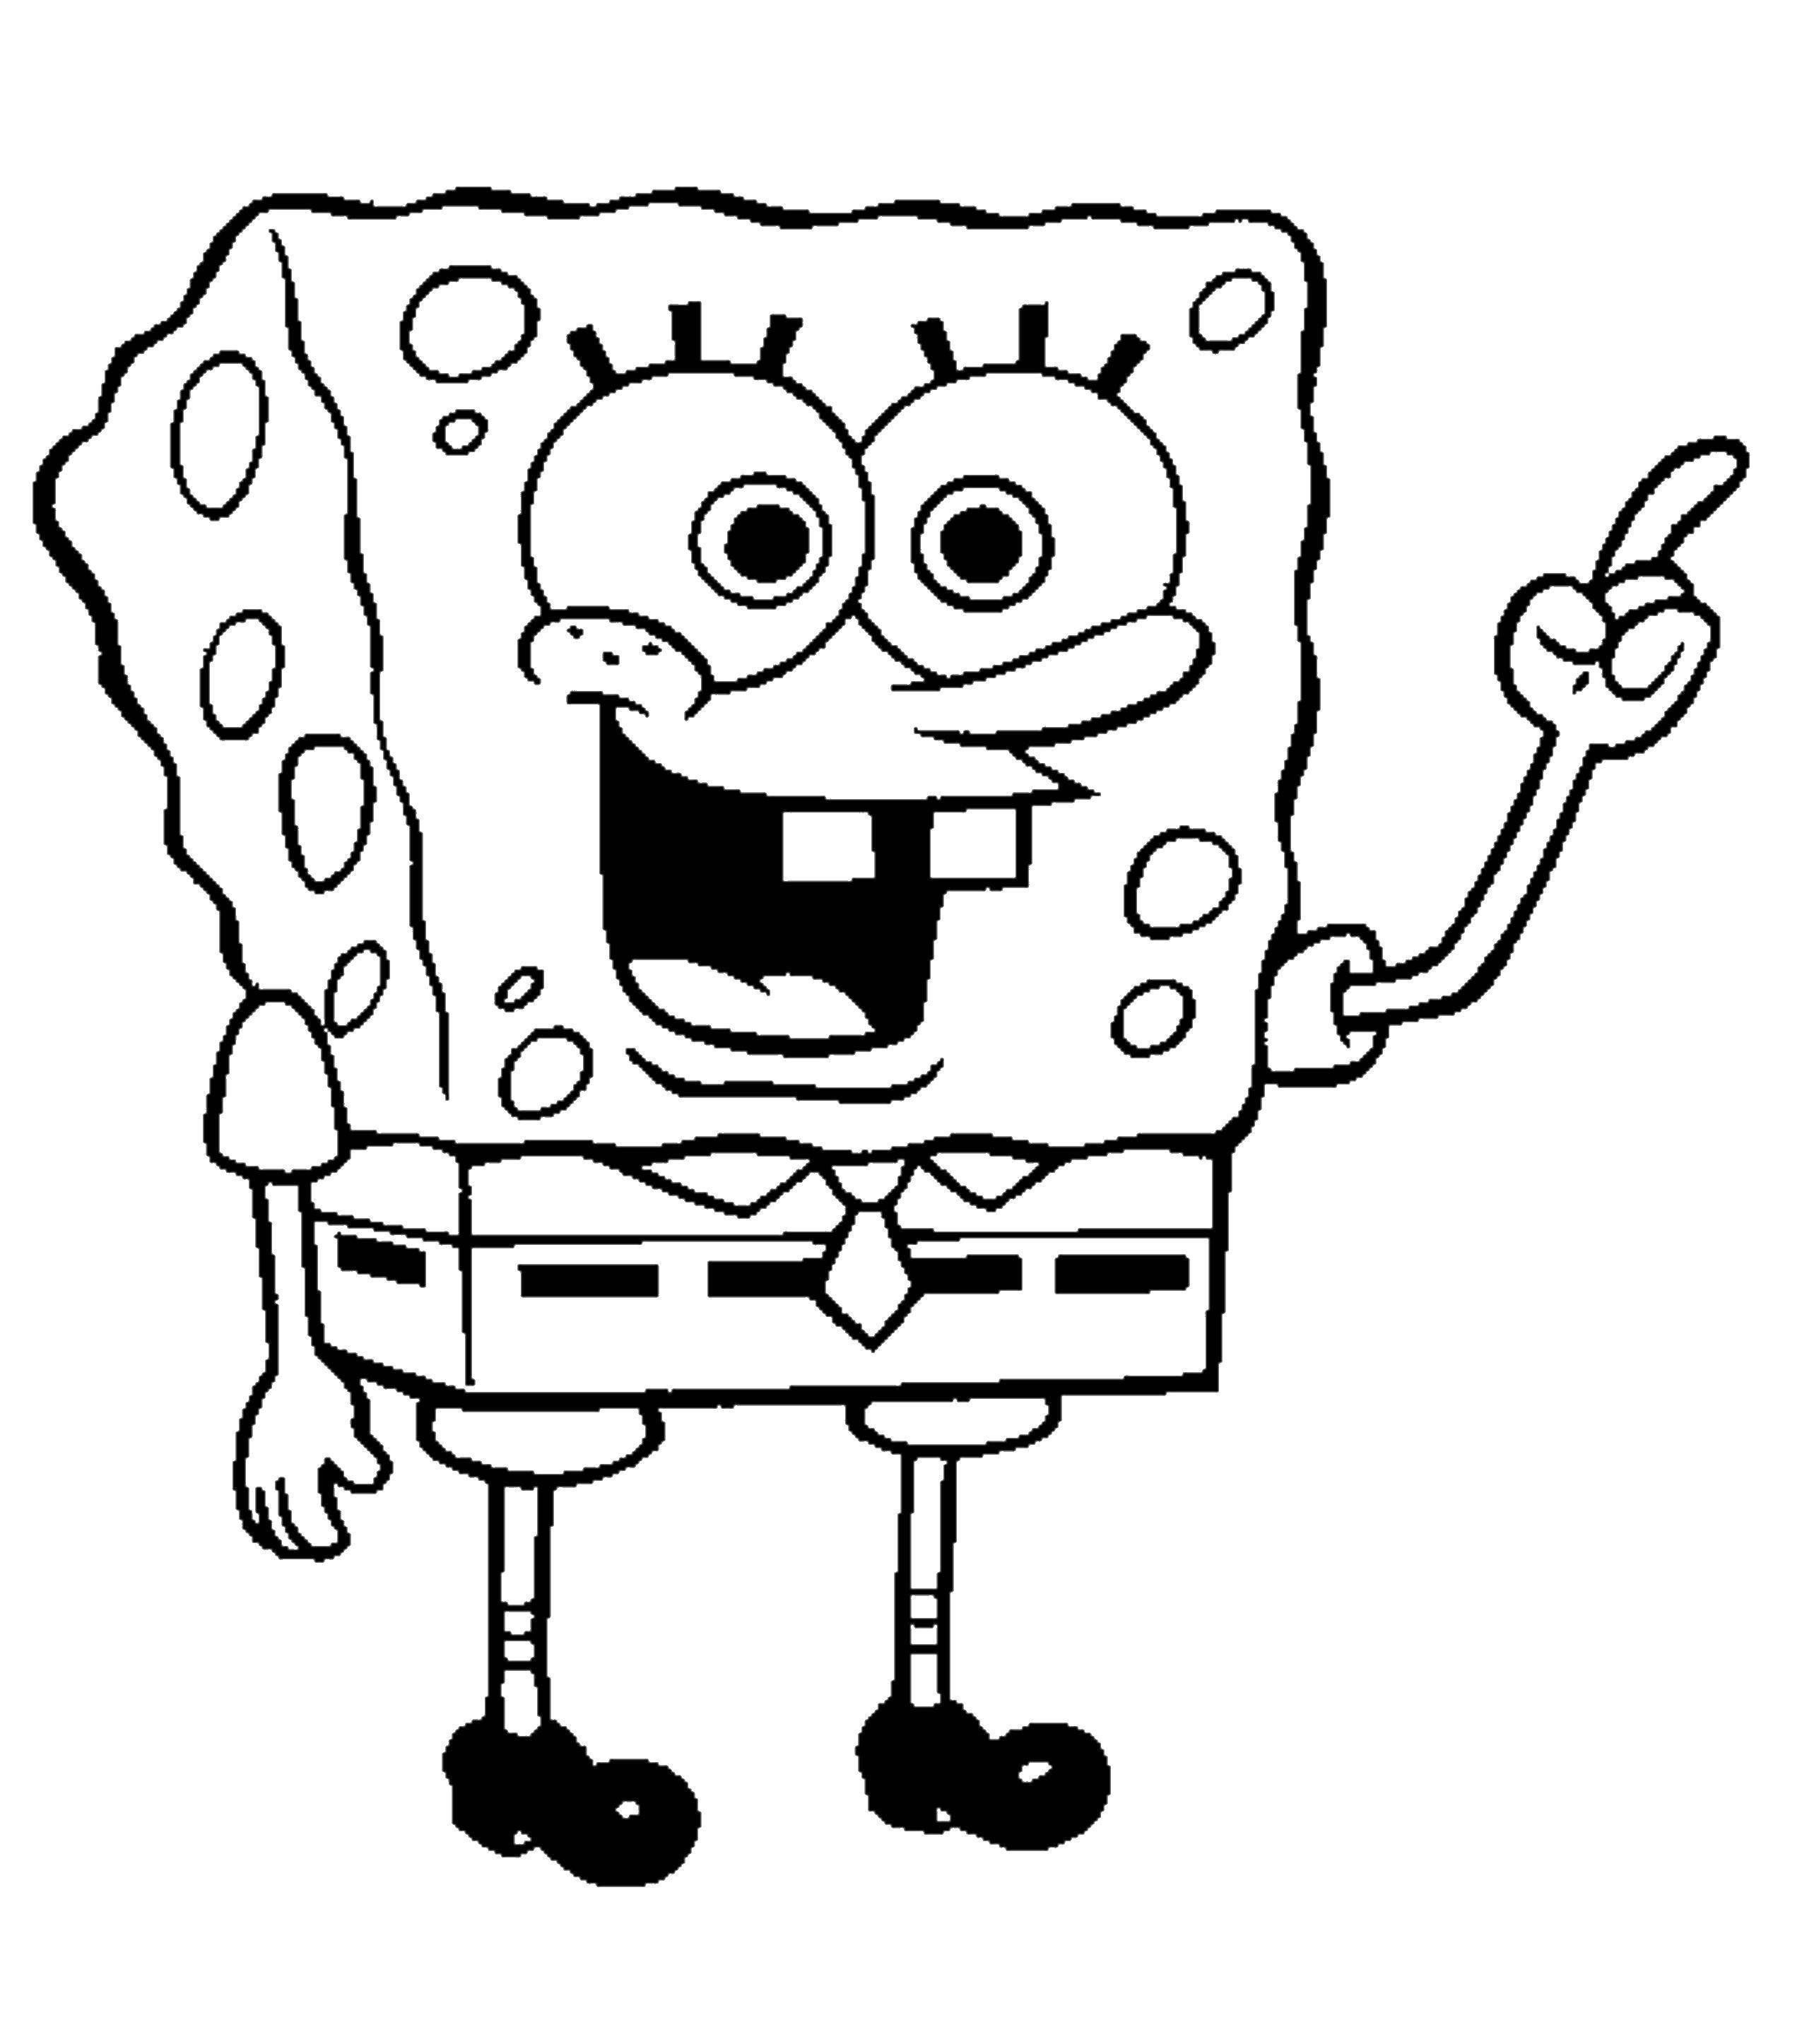 Coloring Cute spongebob. Category Spongebob. Tags:  Cartoon character, spongebob, spongebob.